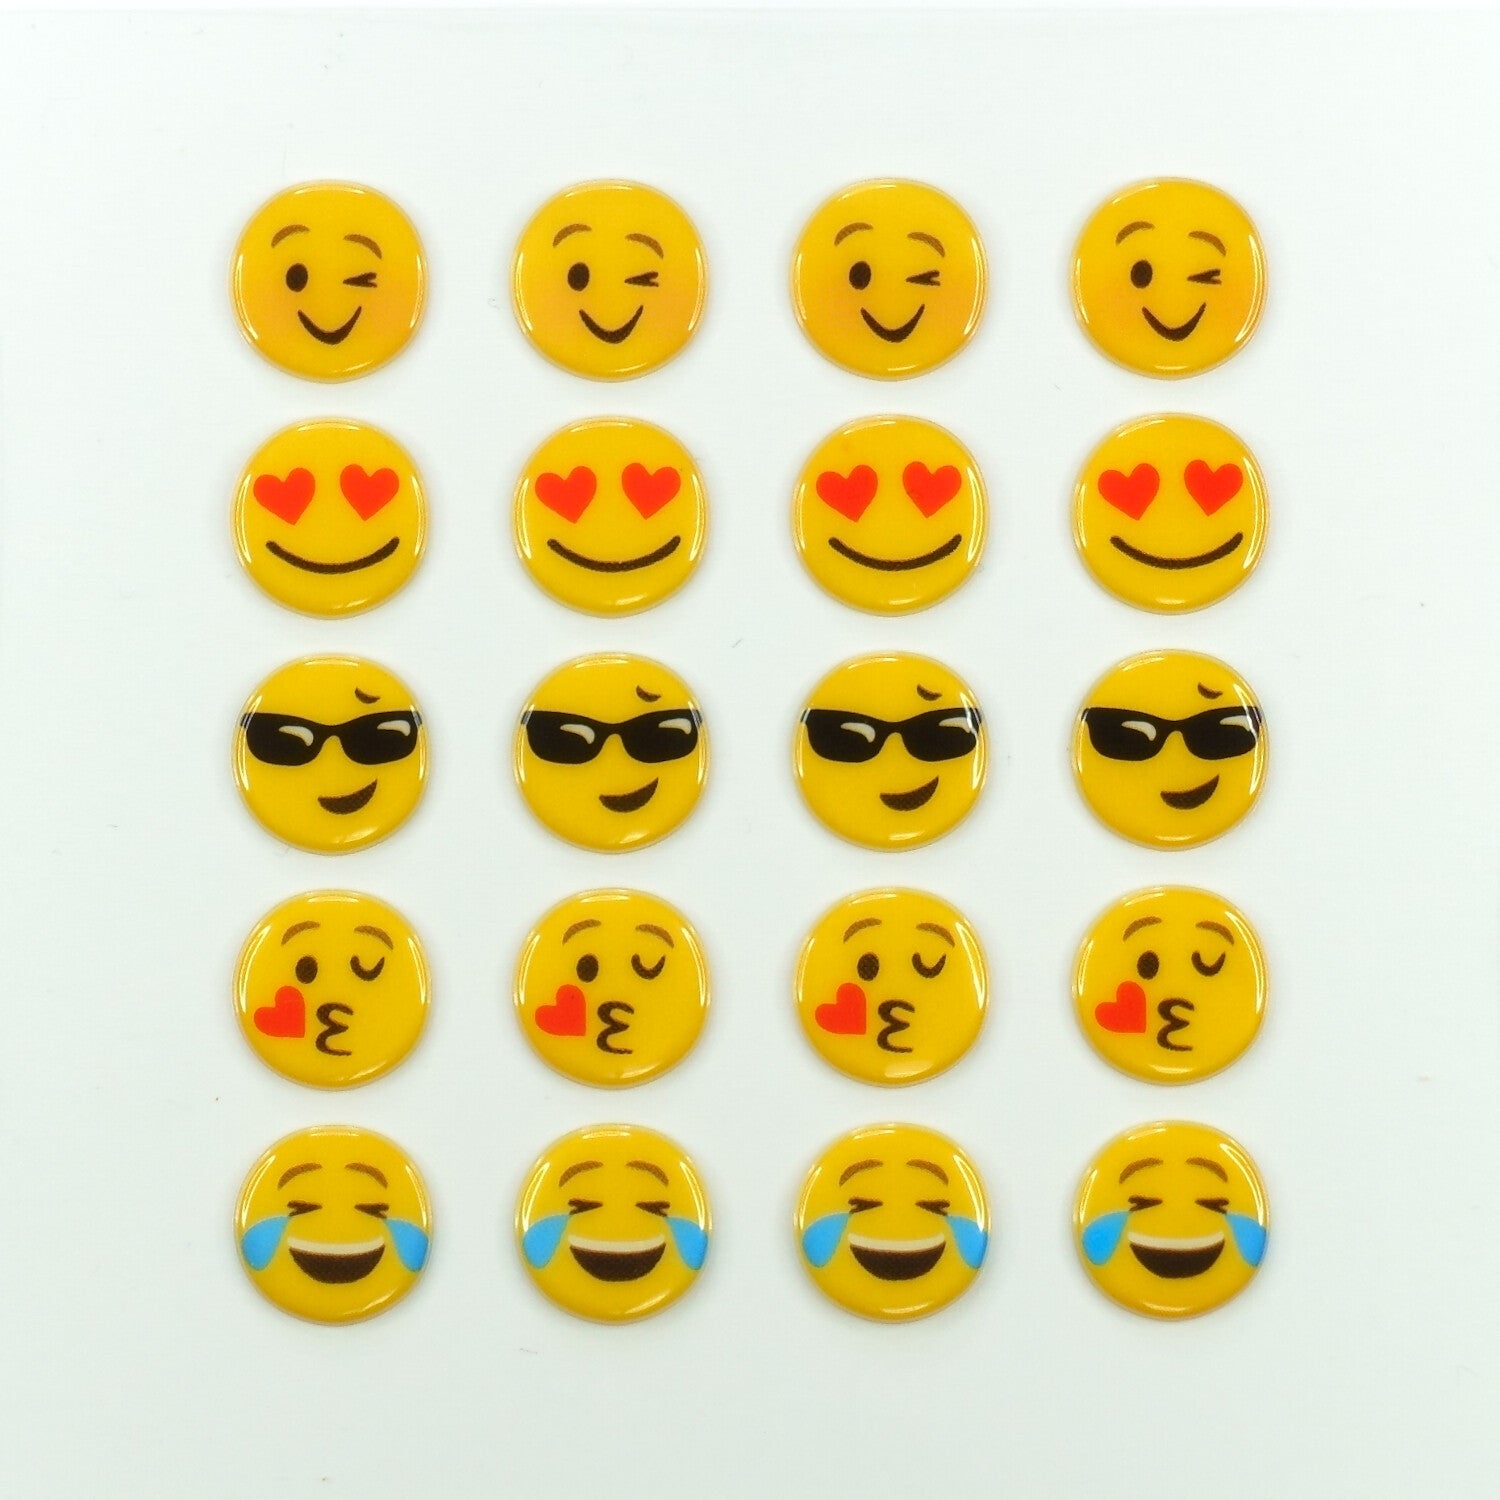 Emoticon face stickers